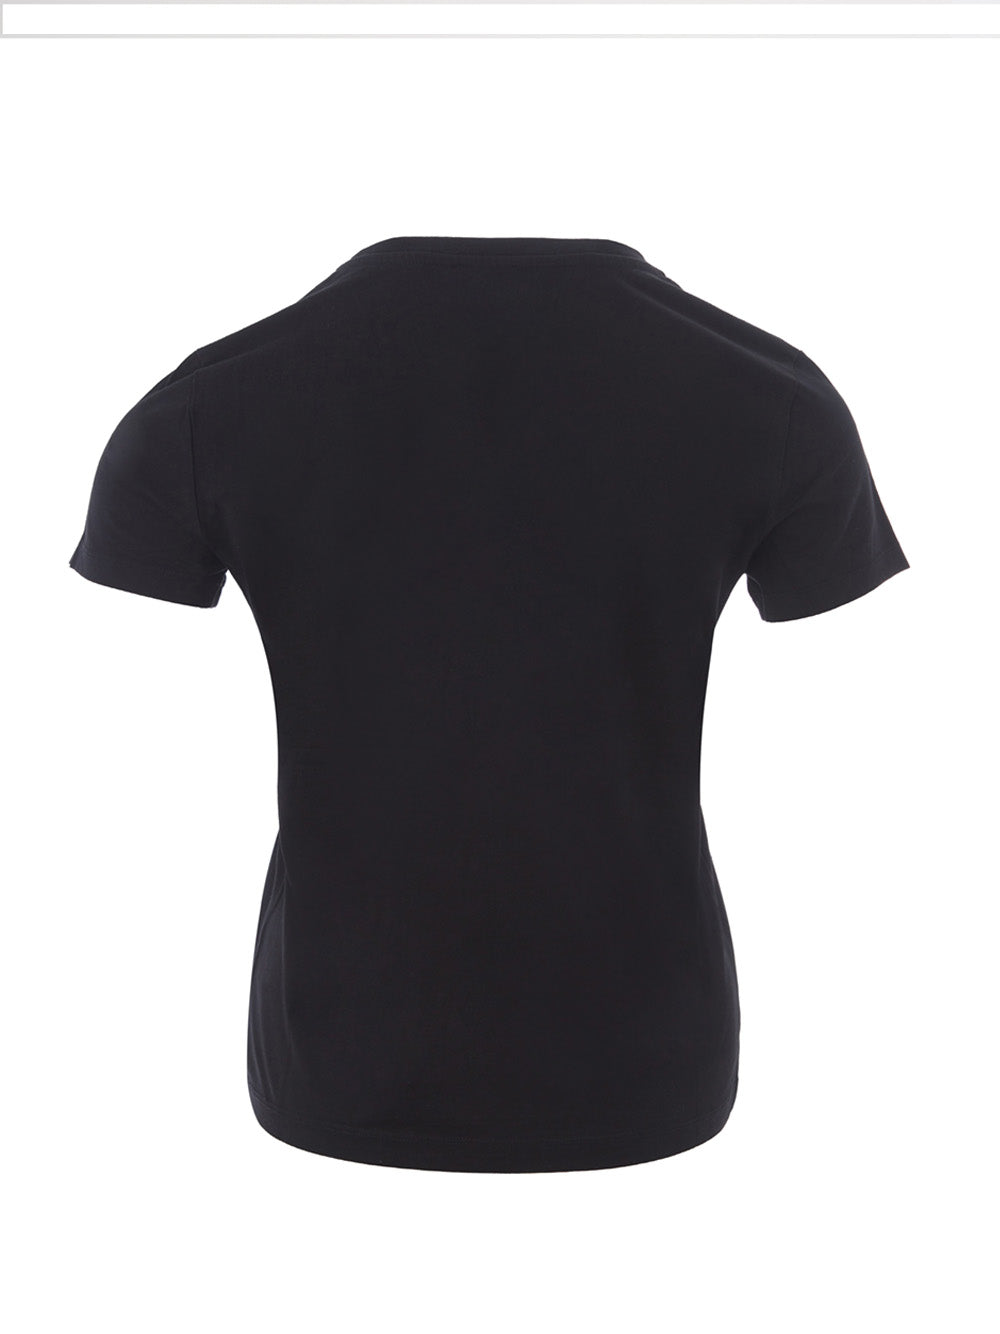 Kenzo T-Shirt in Black Cotton with Velvet Print